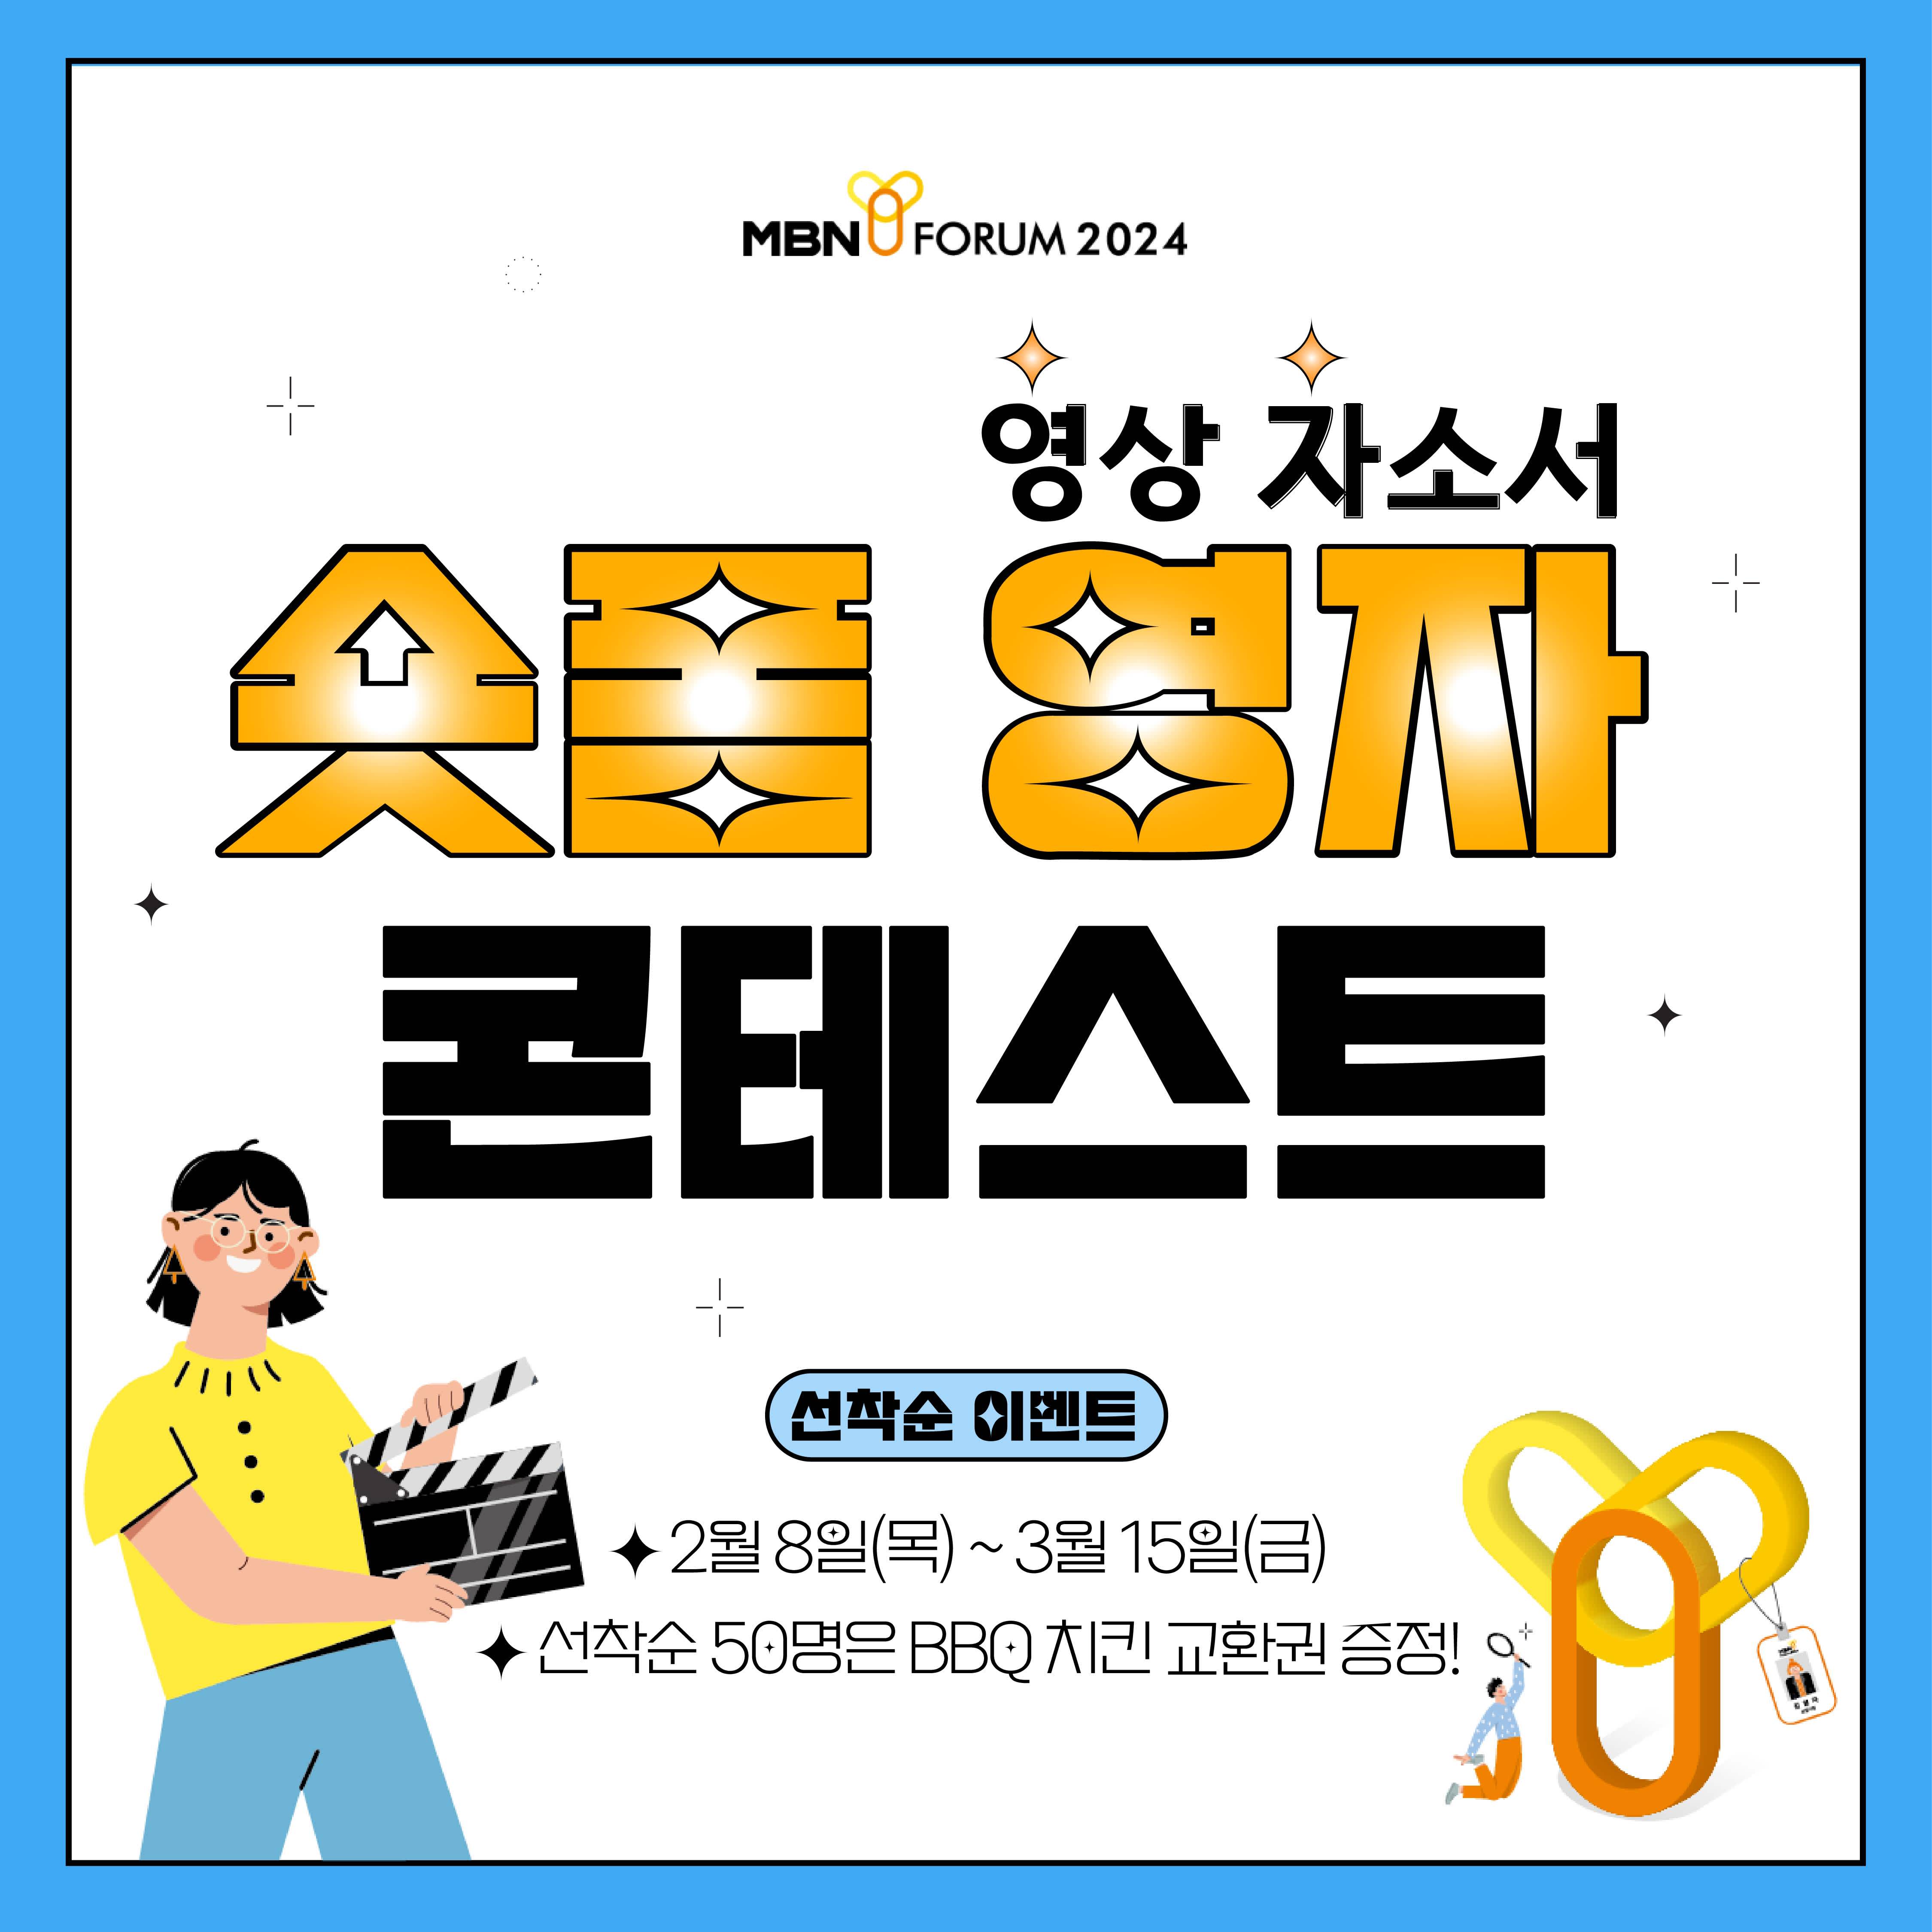 MBN Y 포럼 2024 영자 콘테스트(영상 자기소개서)